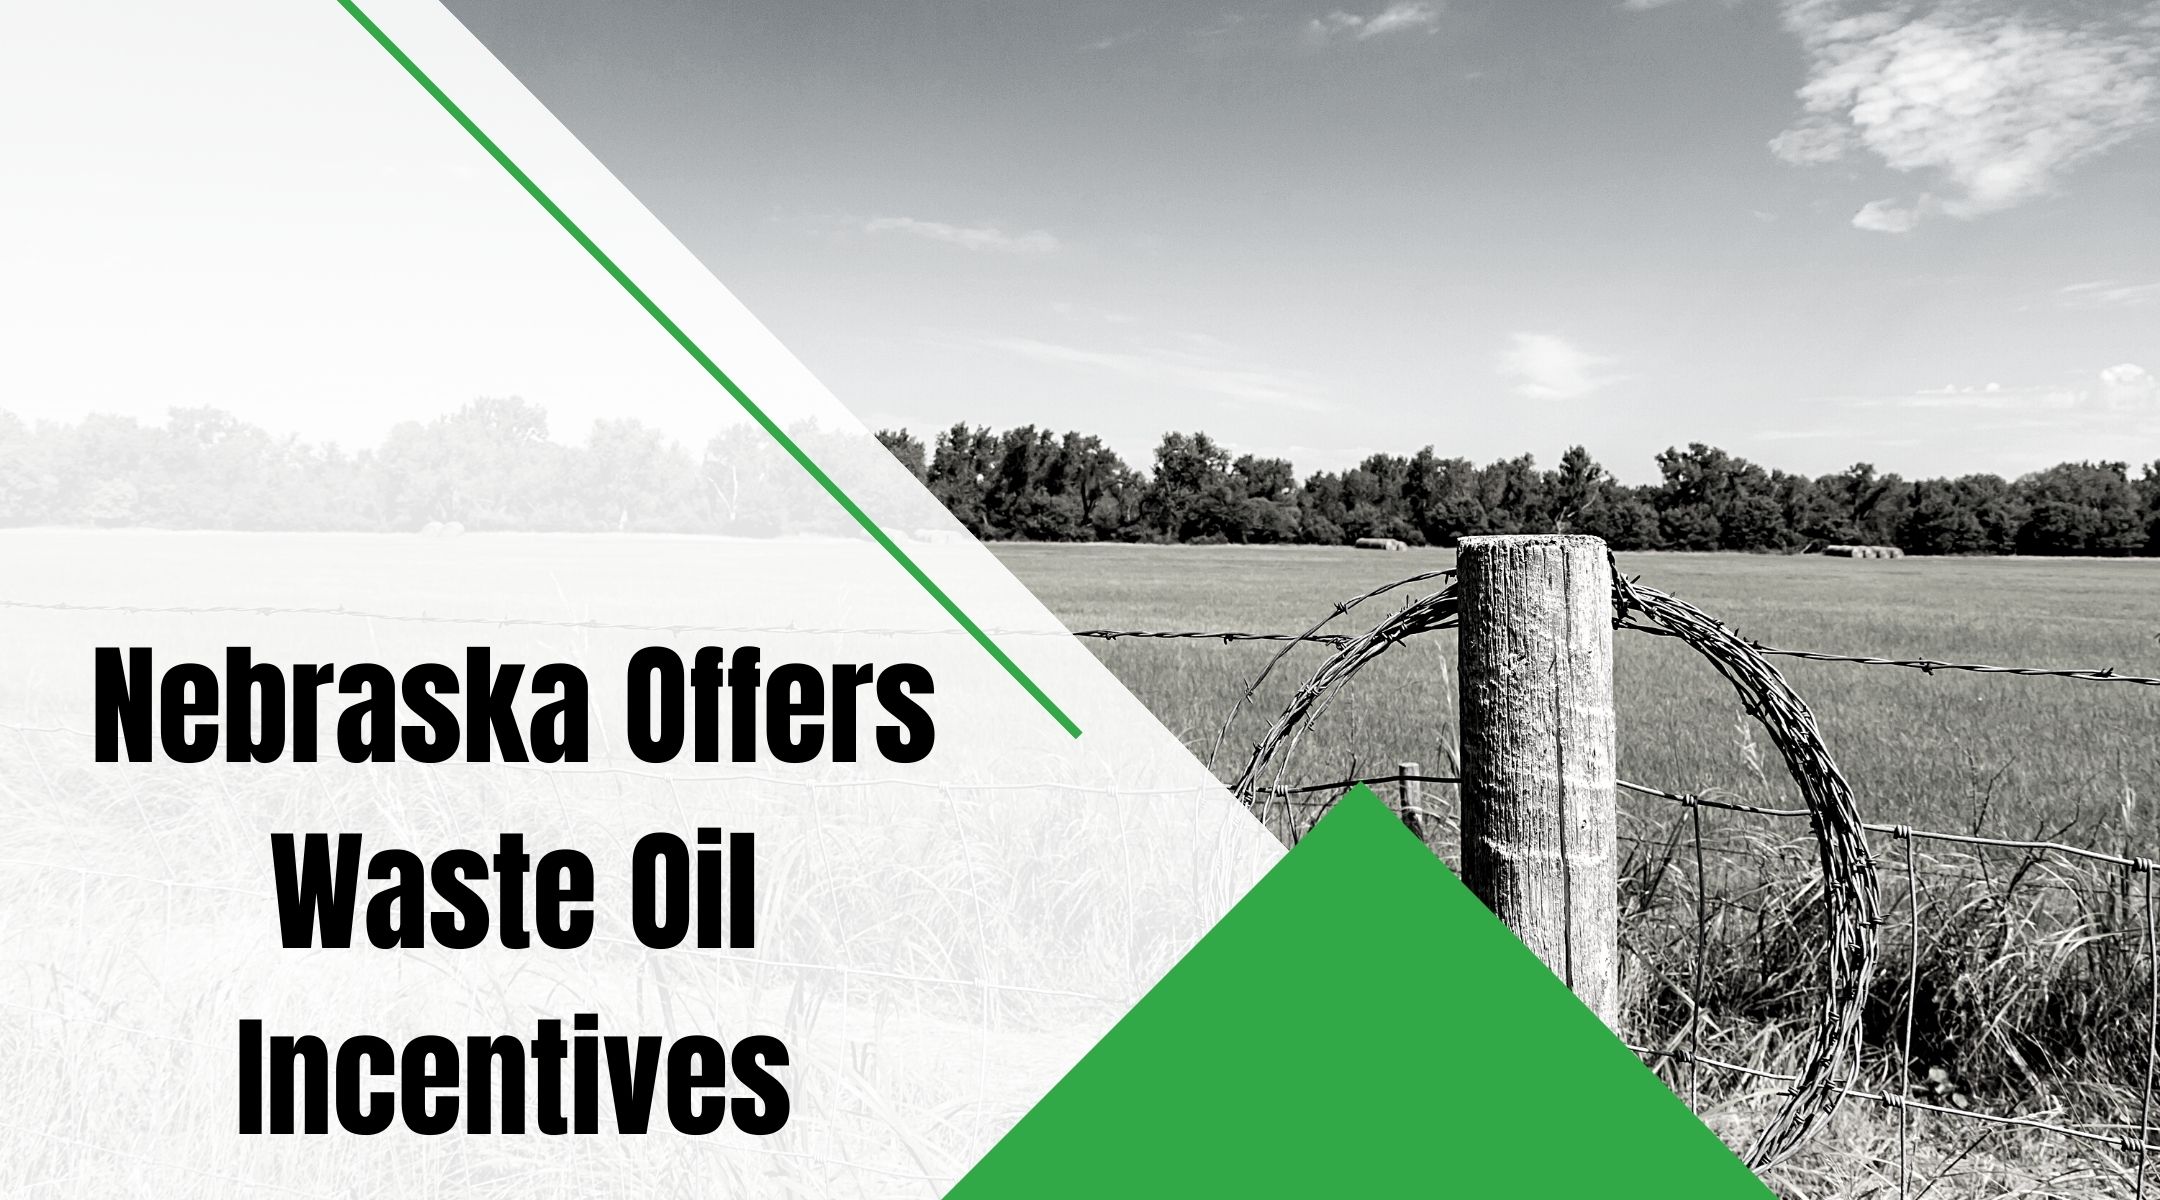 Nebraska Offers Waste Oil Incentives